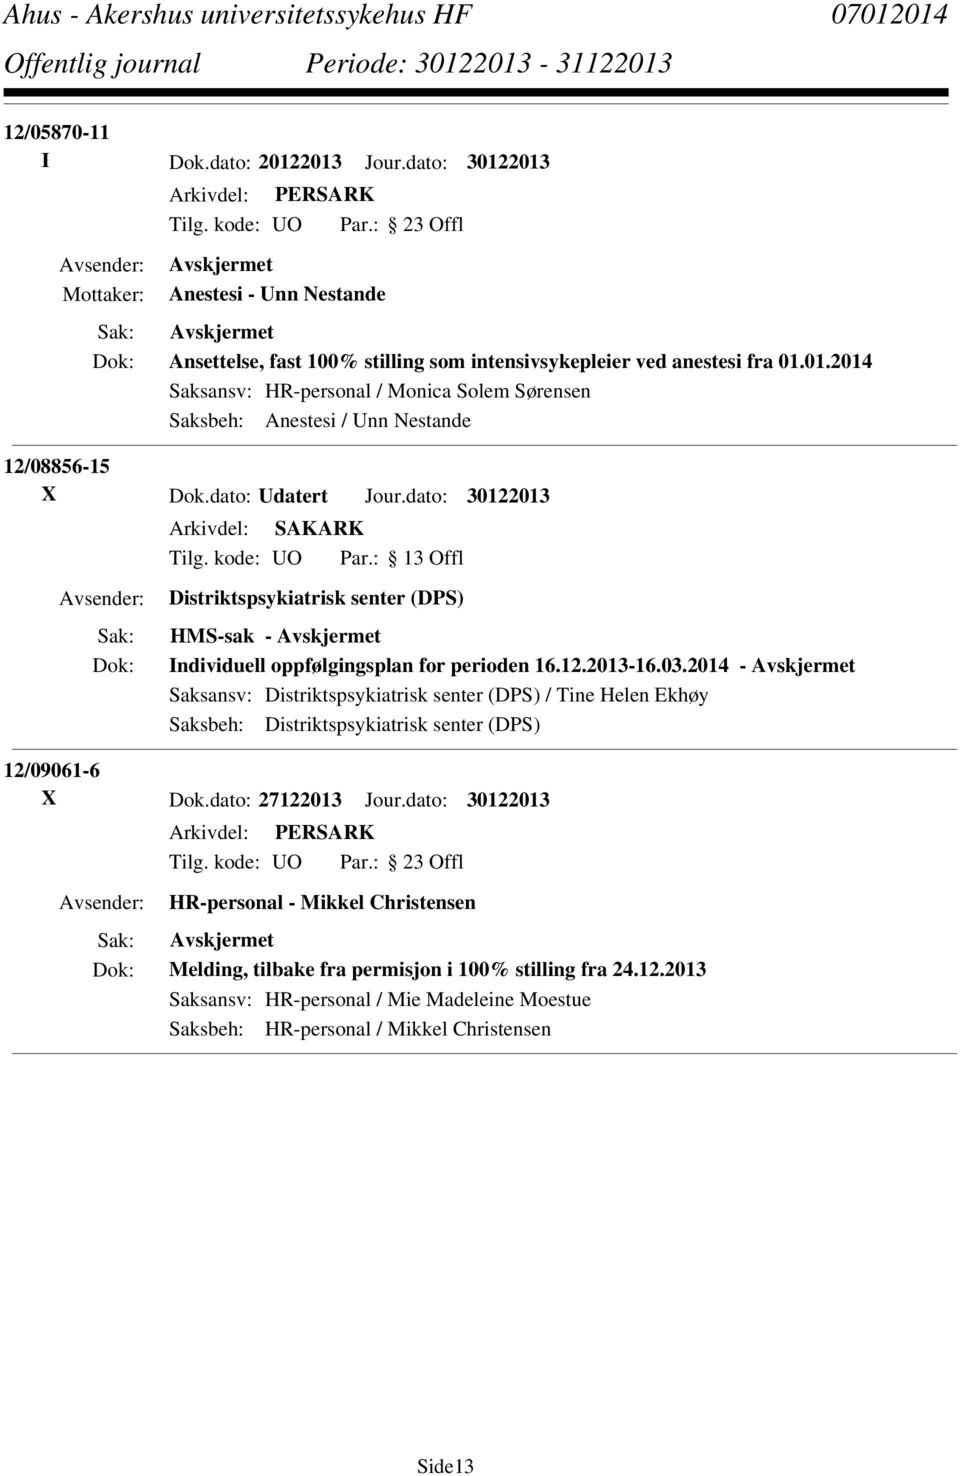 2014 - Saksansv: Distriktspsykiatrisk senter (DPS) / Tine Helen Ekhøy Saksbeh: Distriktspsykiatrisk senter (DPS) 12/09061-6 X Dok.dato: 27122013 Jour.